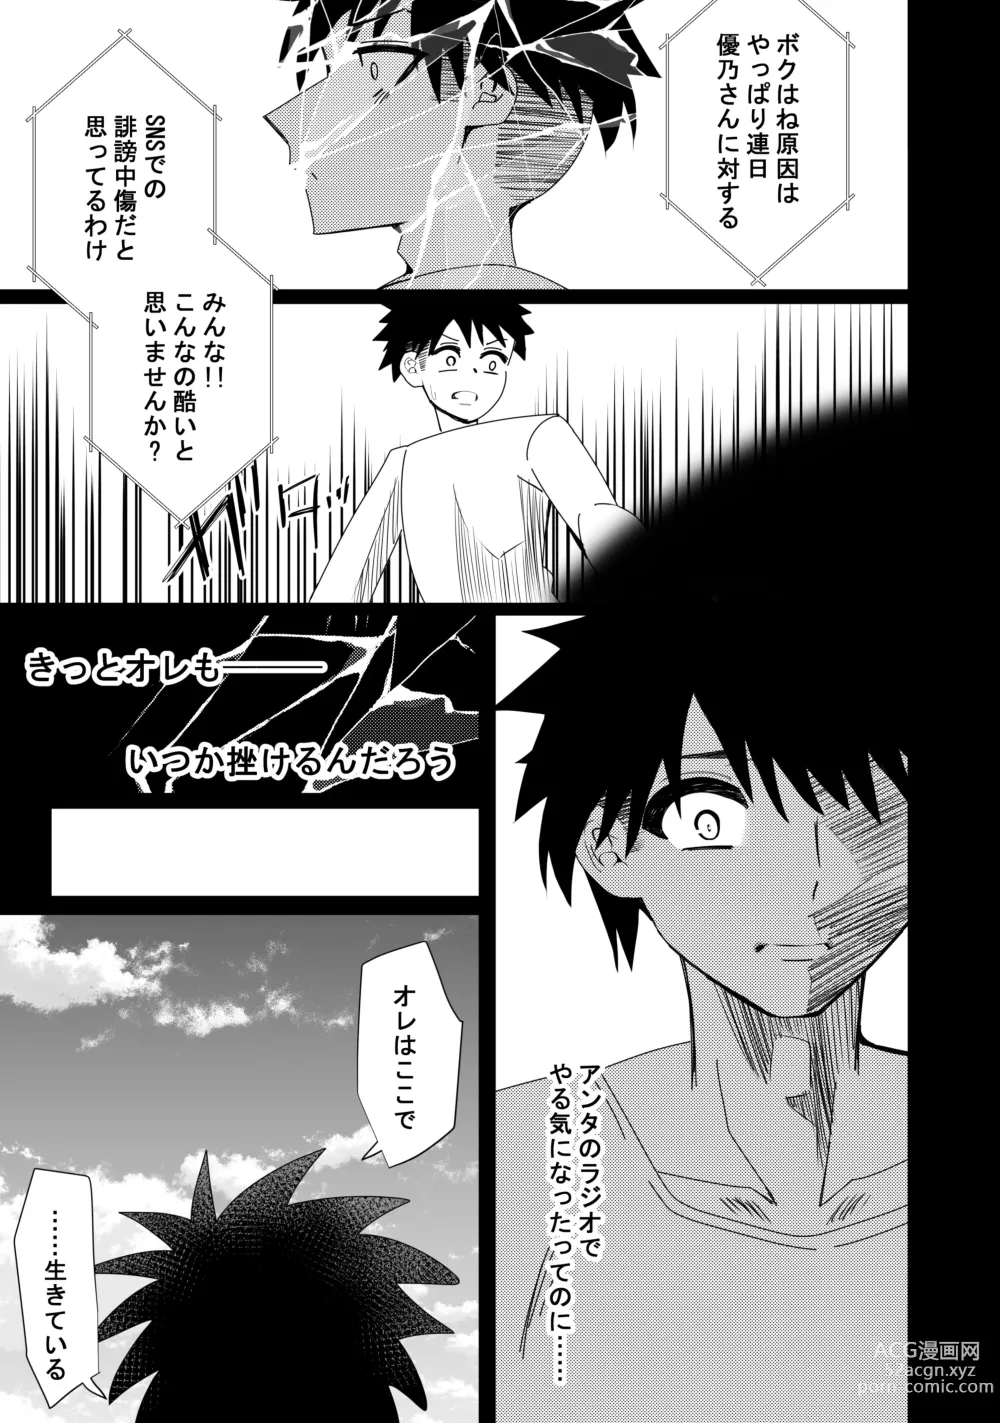 Page 17 of manga Junai Create Tokuten Manga